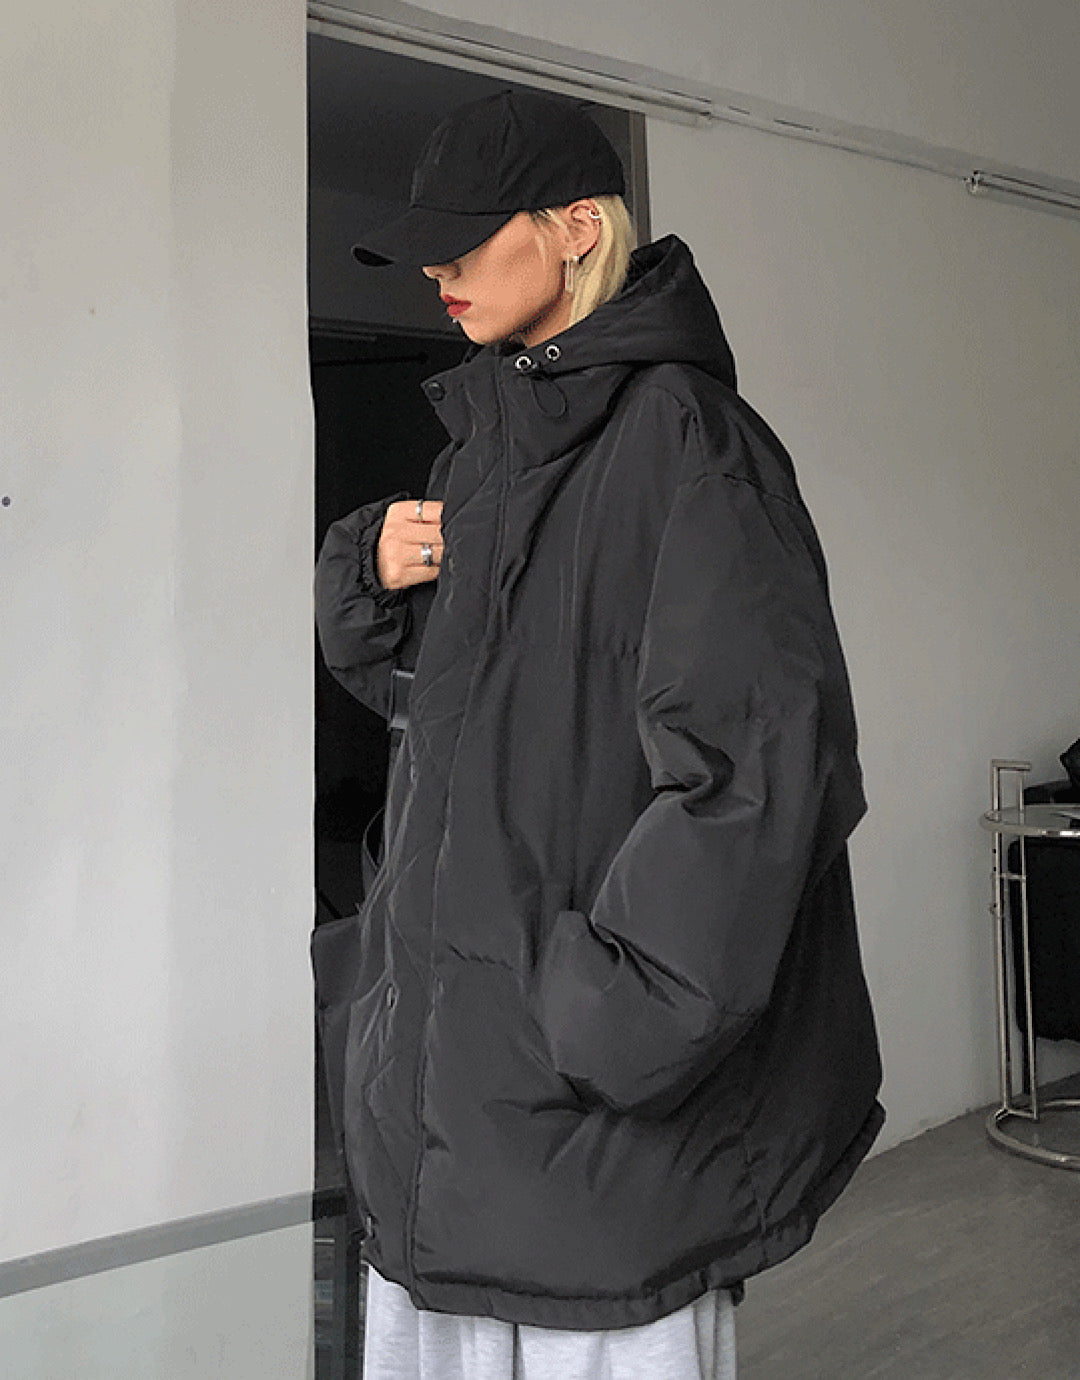 【MEBXX】Over silhouette blouson jacket  MX0007